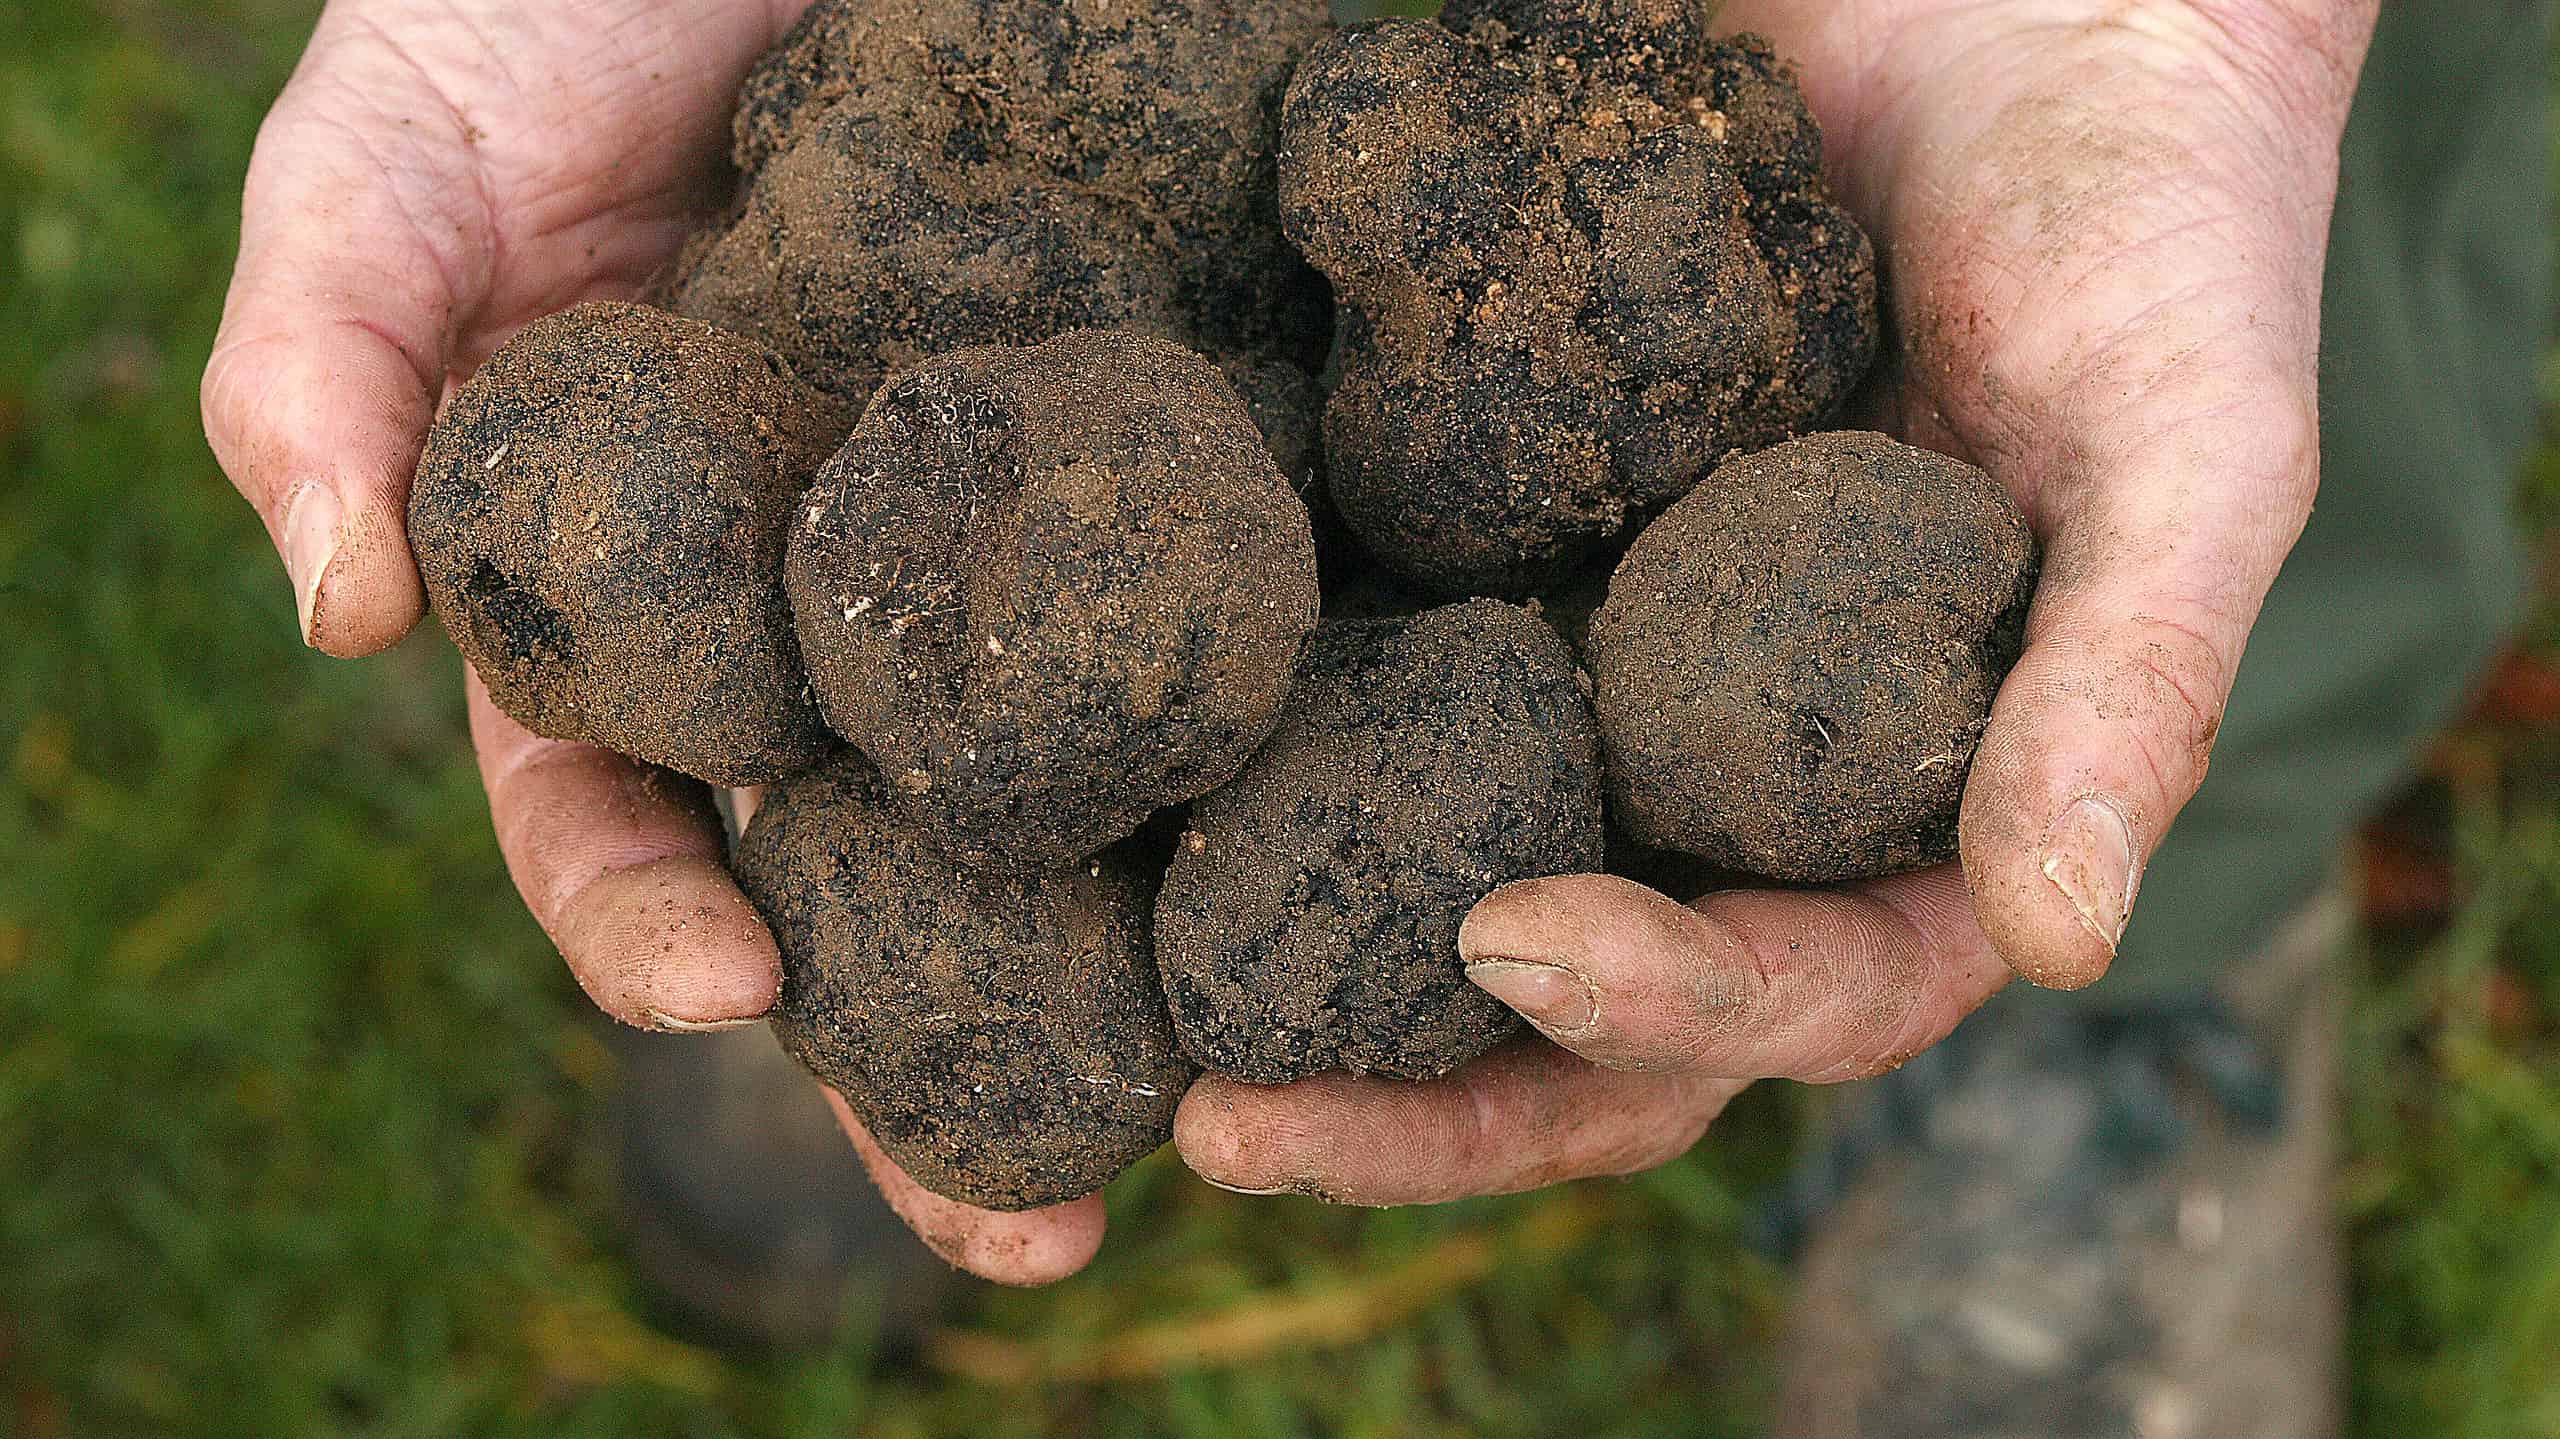 French black truffle, Tuber melanosporum